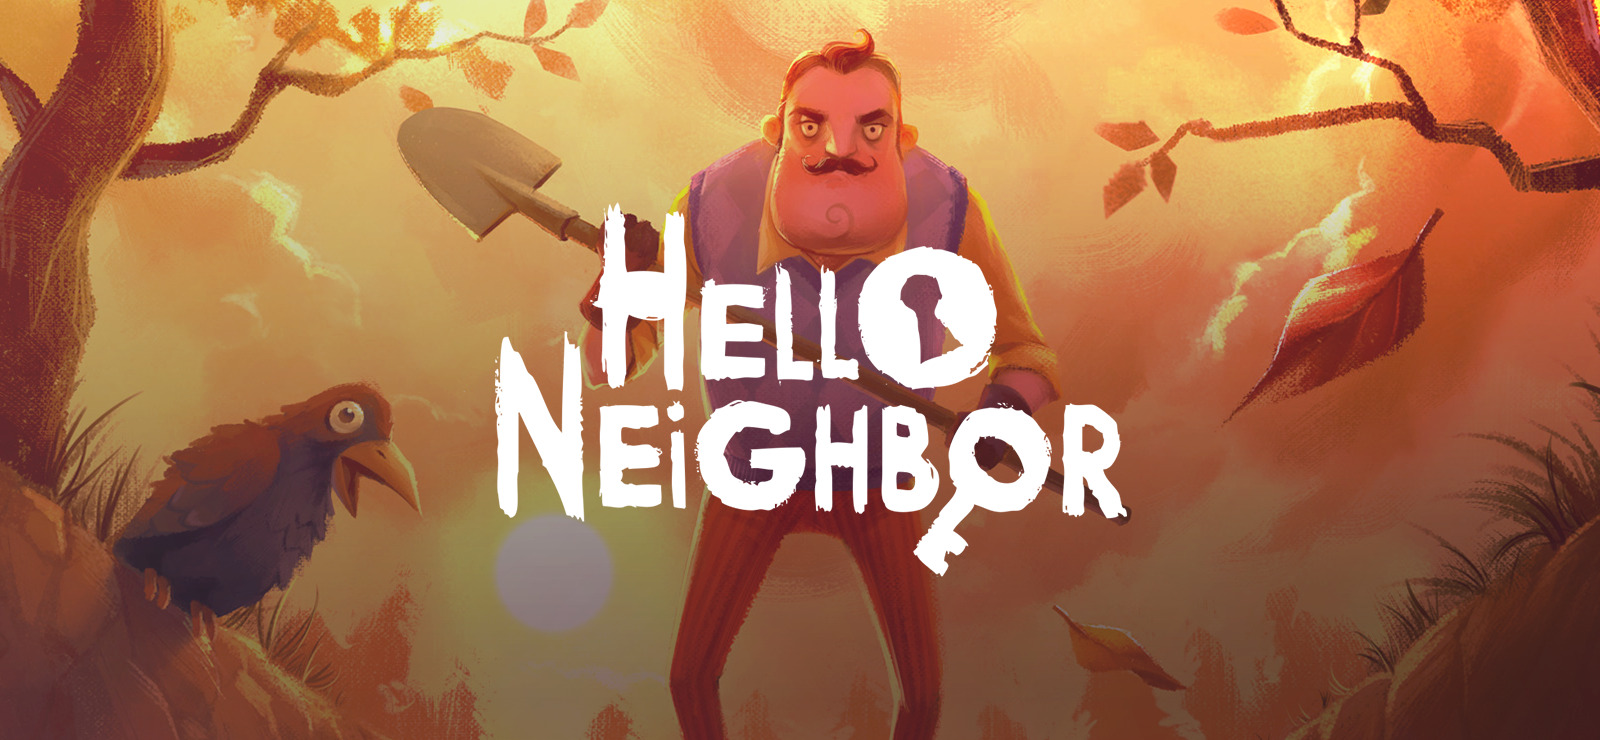 Secret Neighbor iOS Latest Version Free Download - Gaming Debates